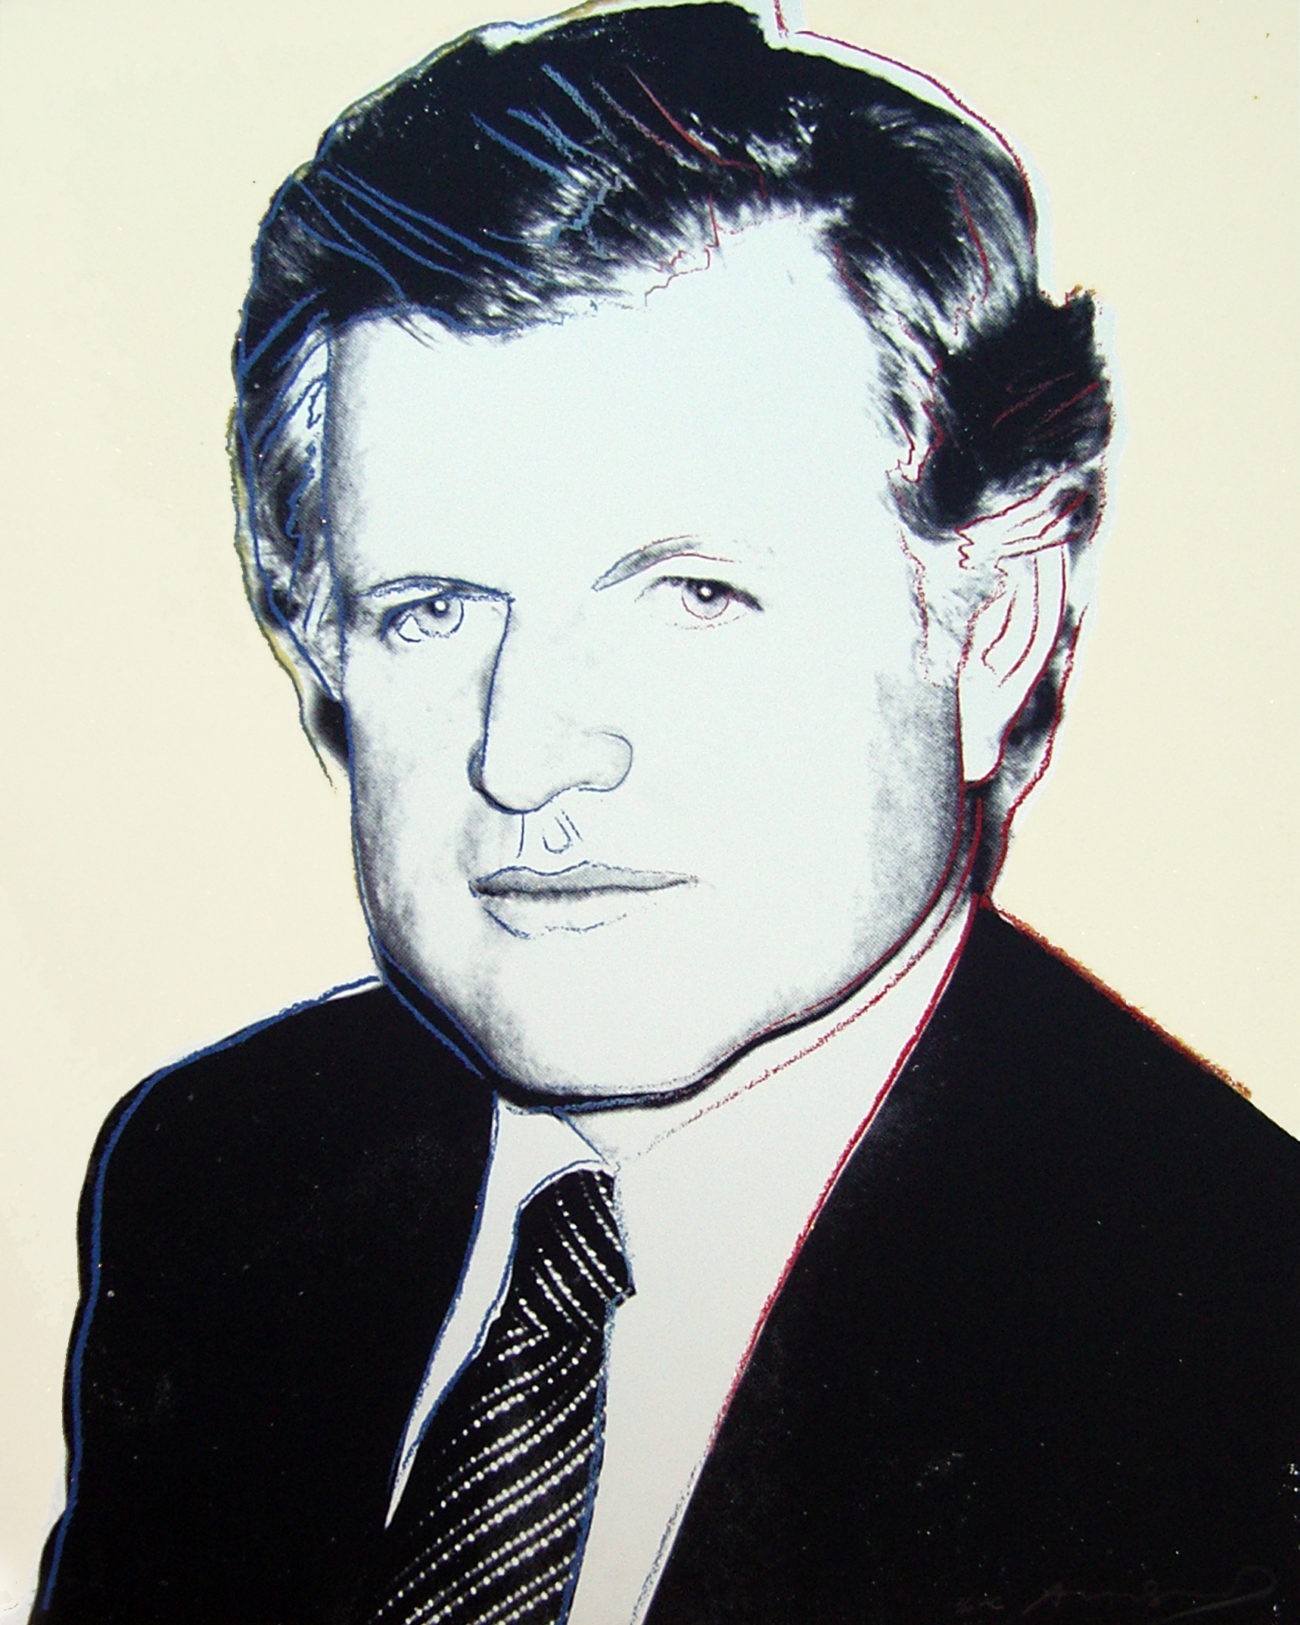 Andy Warhol | Edward Kennedy 240 | 1980 | Image of Artists' work.